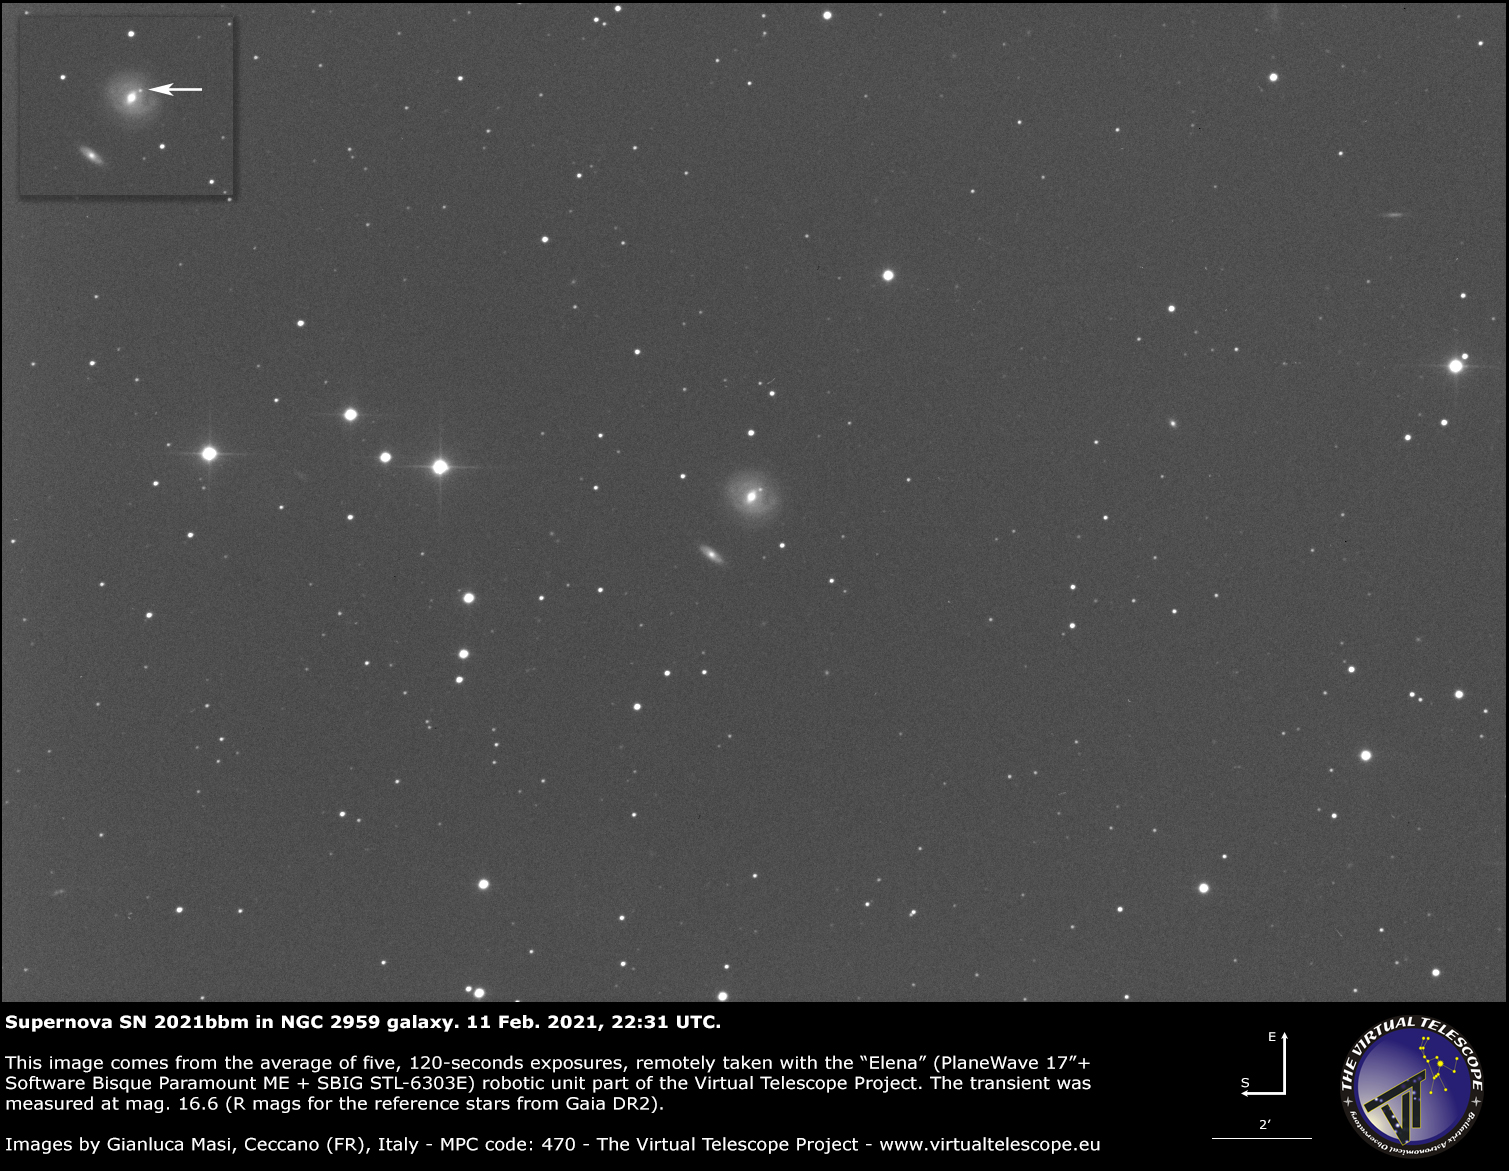 Supernova SN 2021bbm in NGC 2959 galaxy: 11 Feb. 2021.